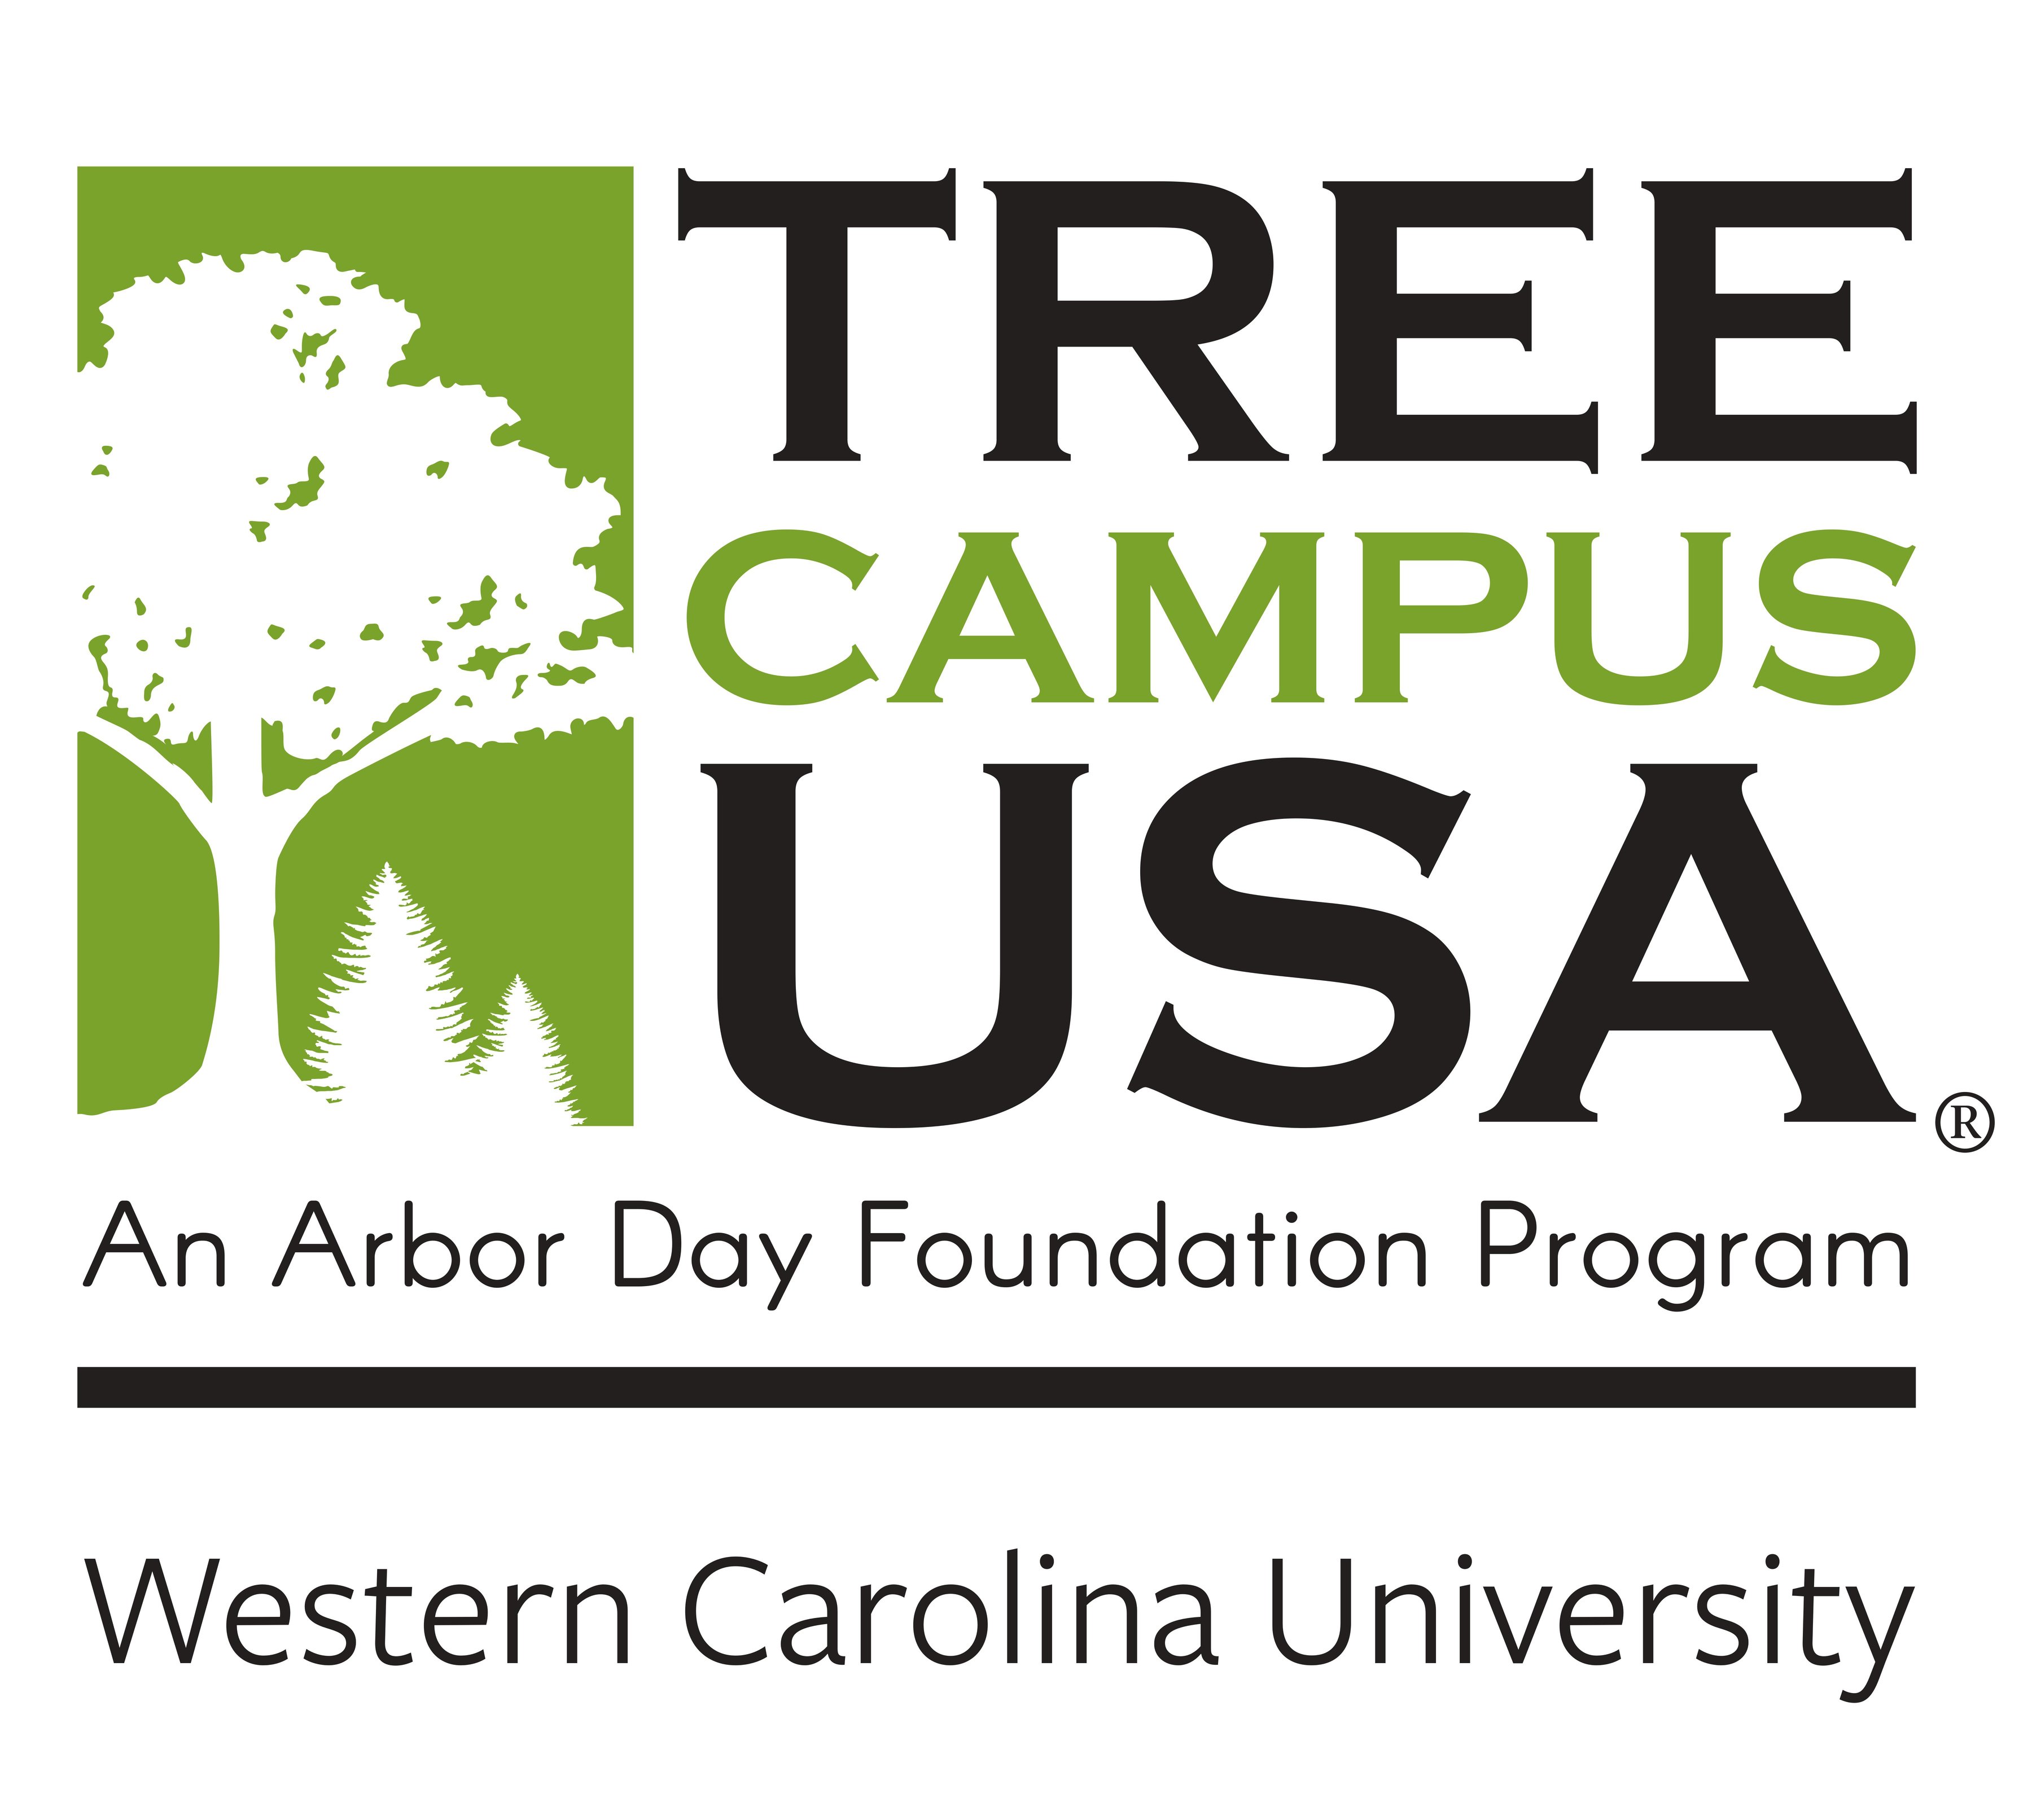 Tree Campus USA logo